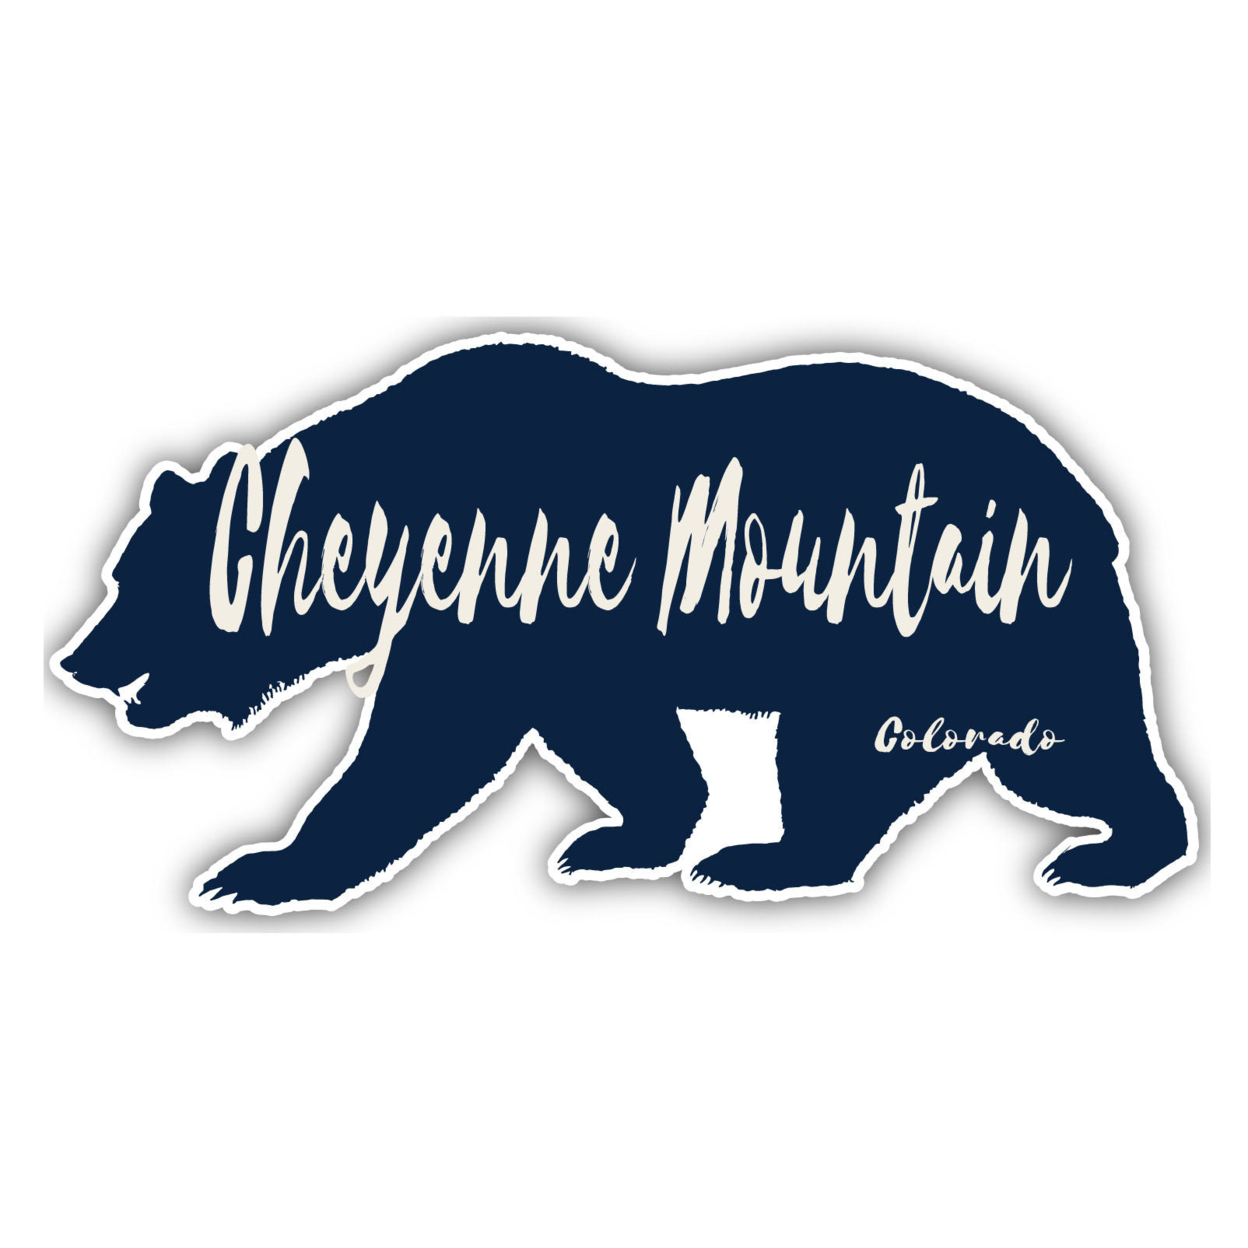 Cheyenne Mountain Colorado Souvenir Decorative Stickers (Choose Theme And Size) - Single Unit, 2-Inch, Bear